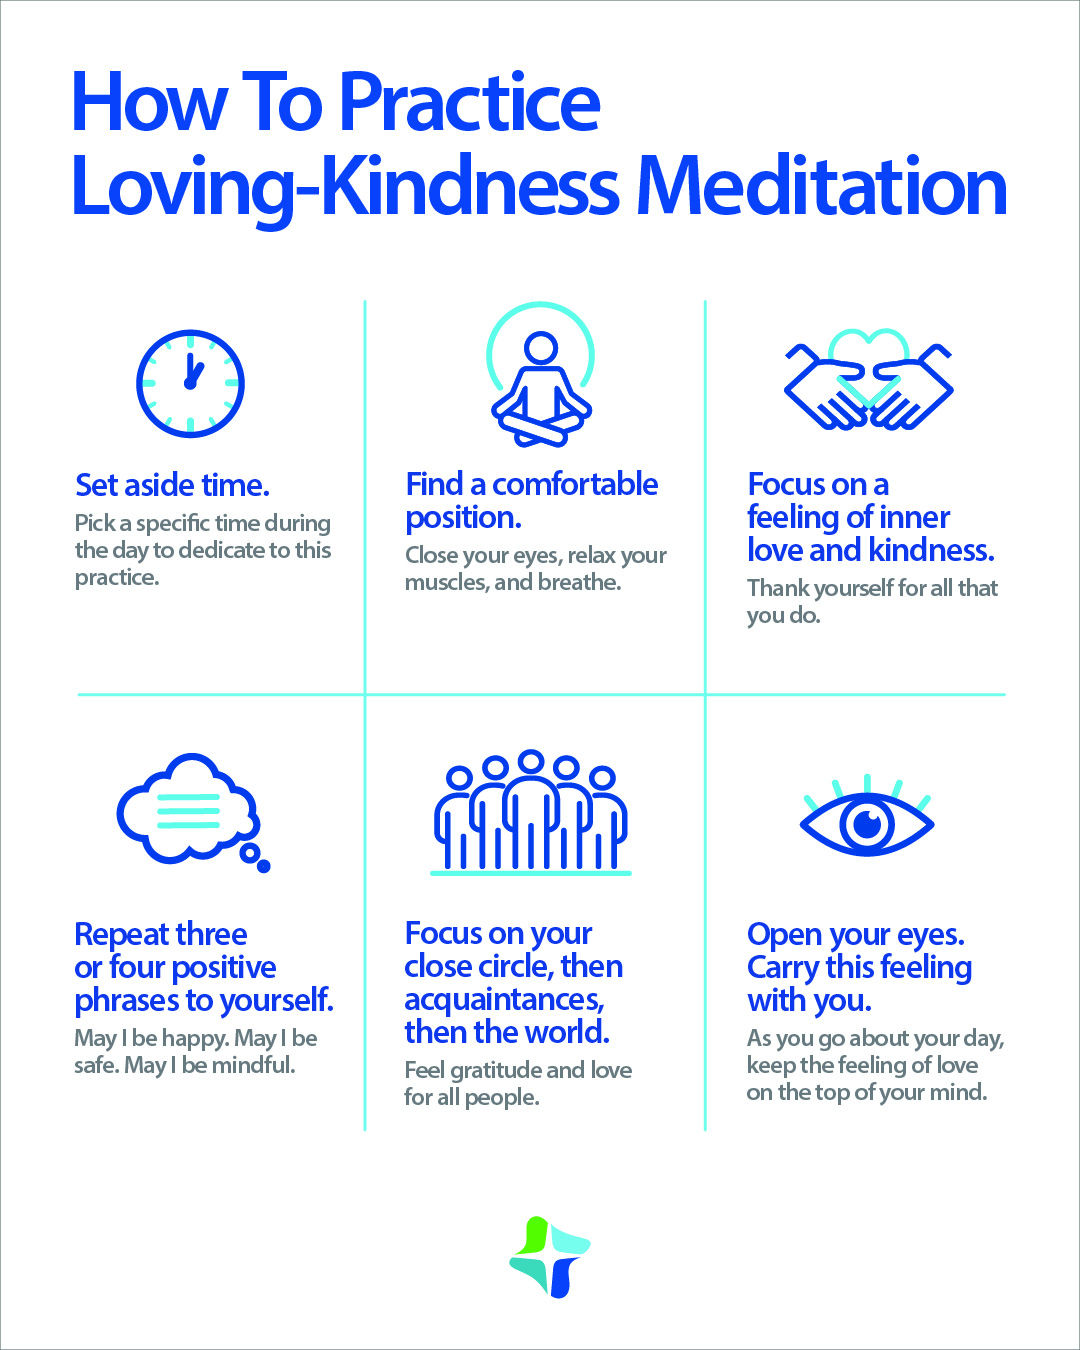 research on loving kindness meditation